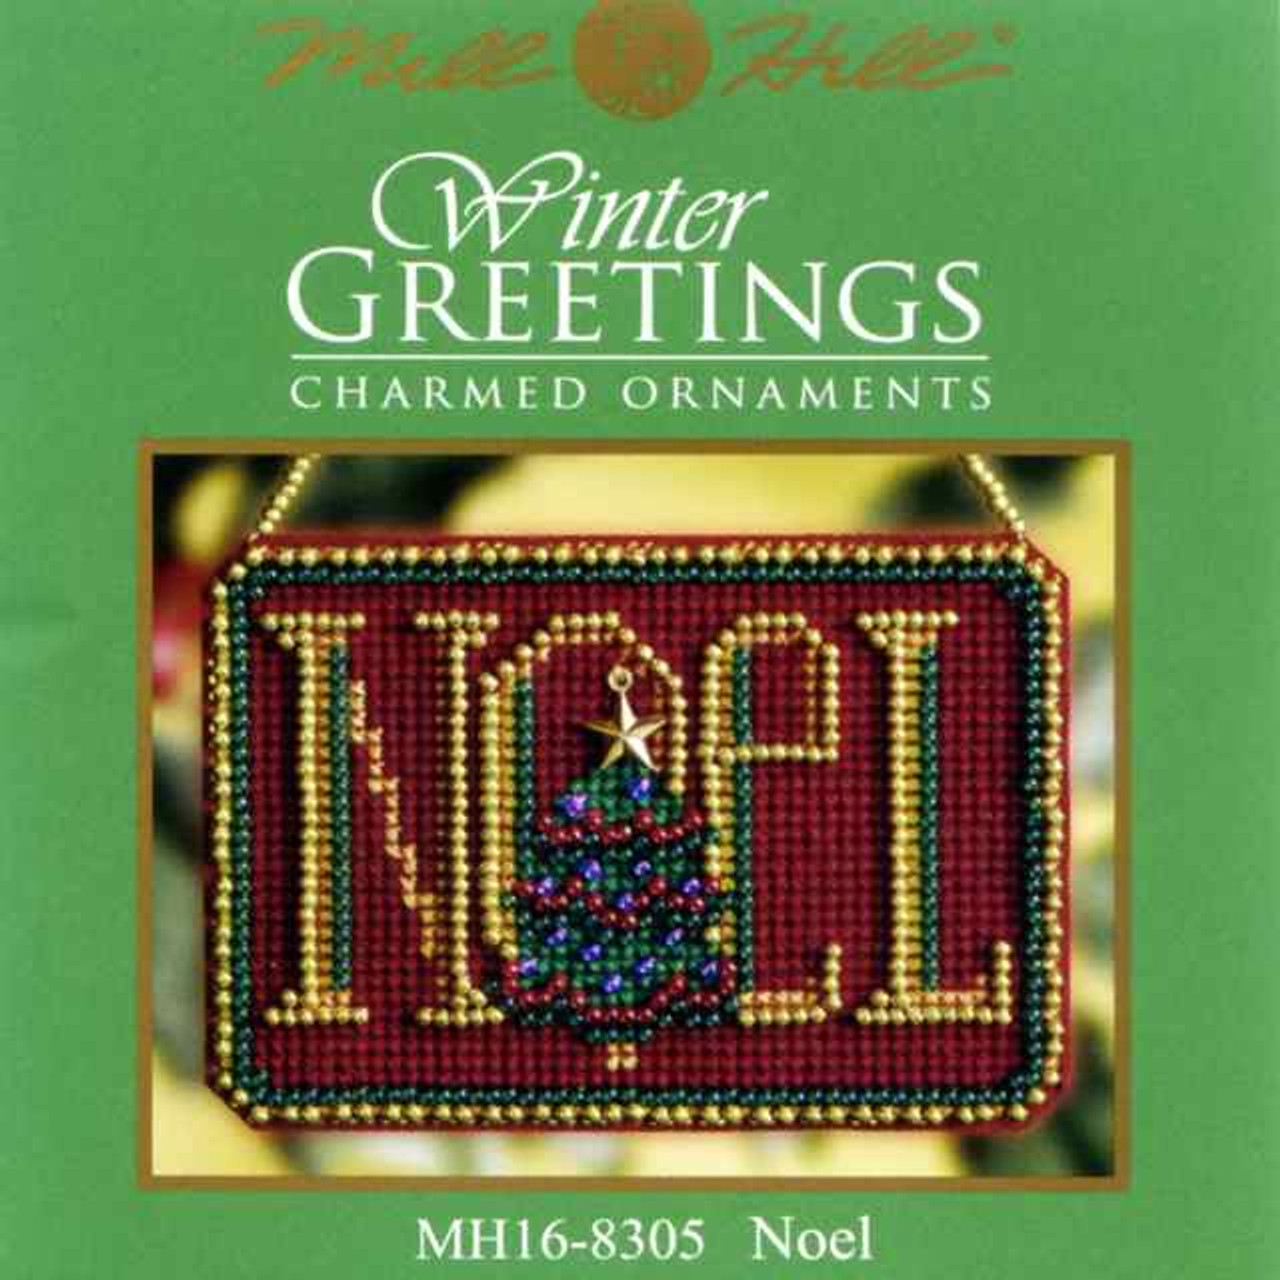 Noel Bead Christmas Ornament Kit Mill Hill 2008 Winter Greetings